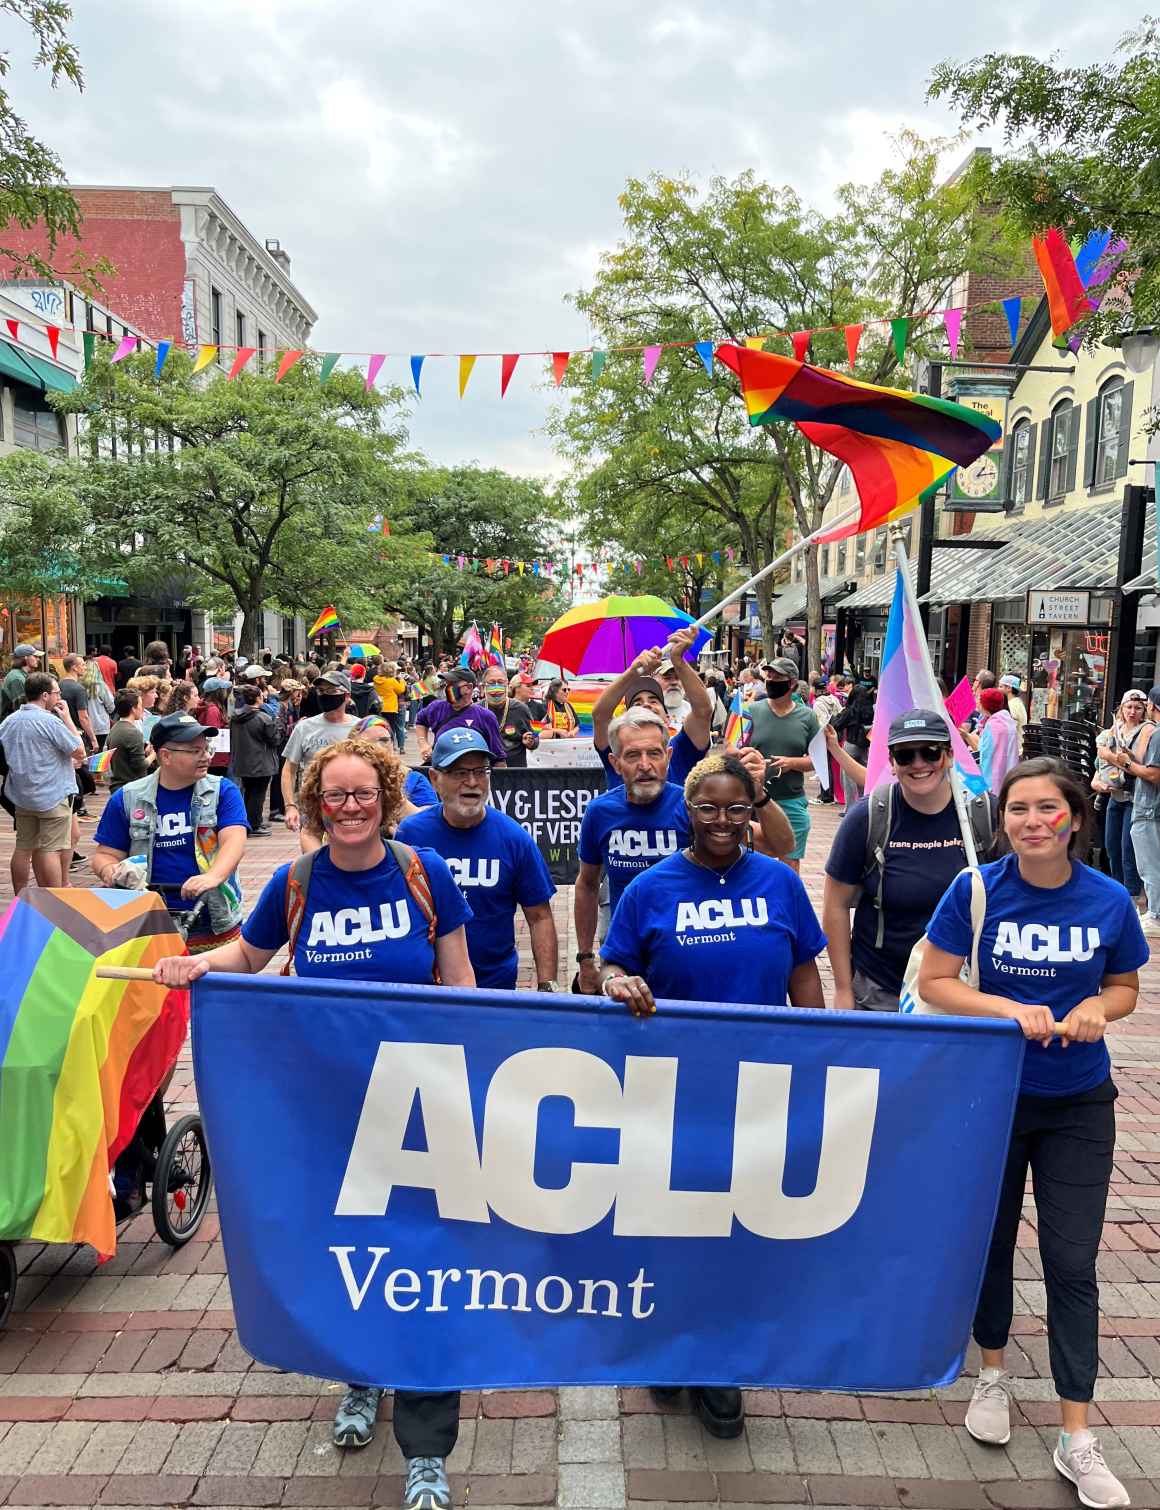 ACLU crew marching